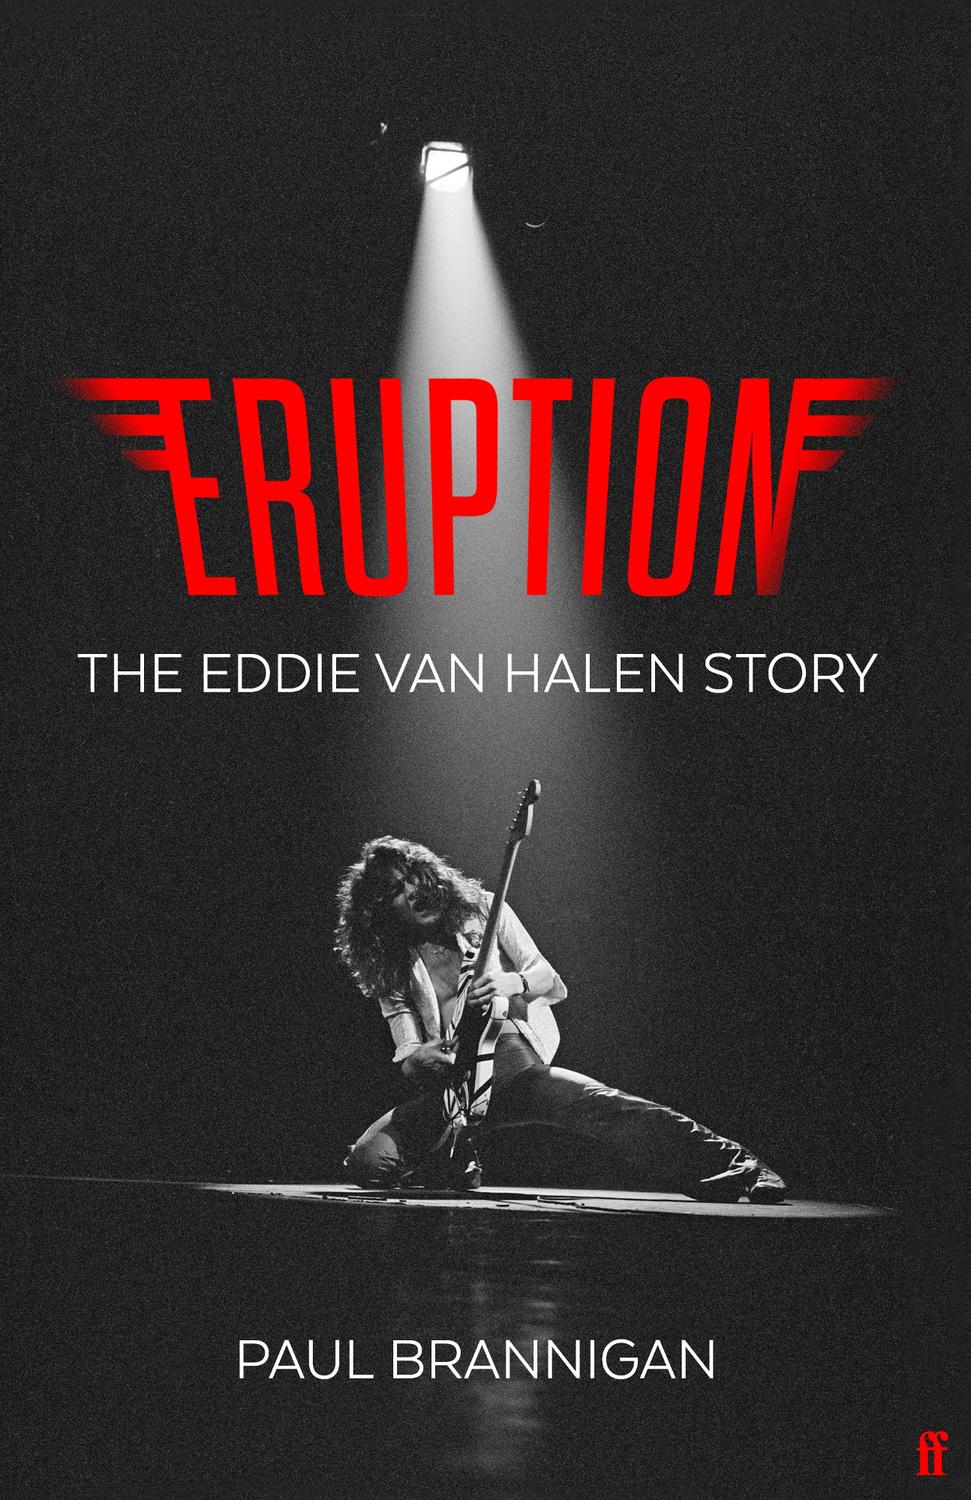 v CONTENTS vii Lost in music Eddie Van Halen didnt initially hear his - photo 1